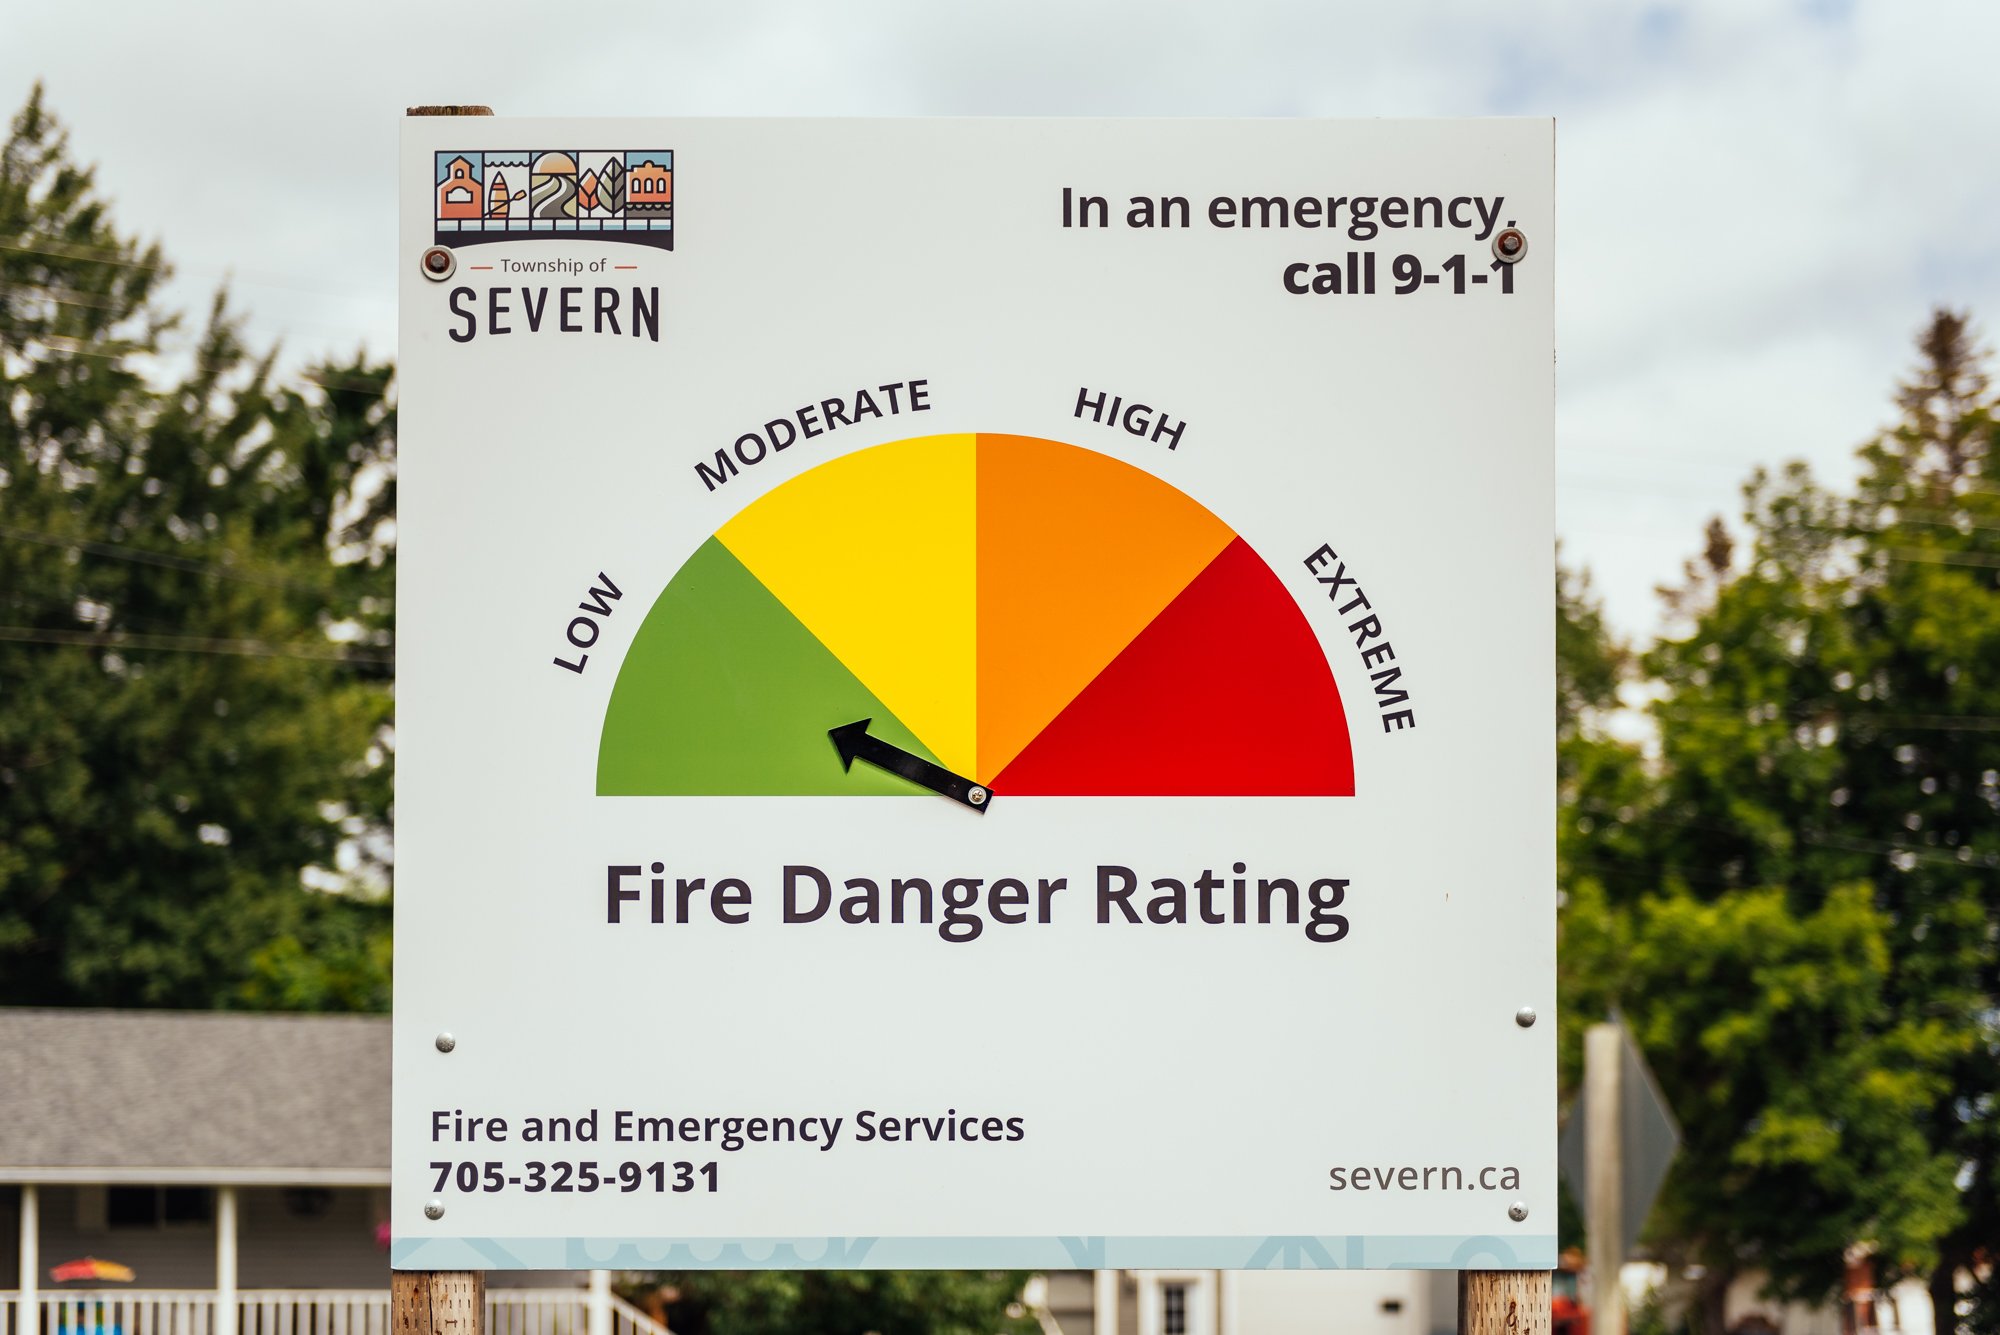 Fire danger rating set at low